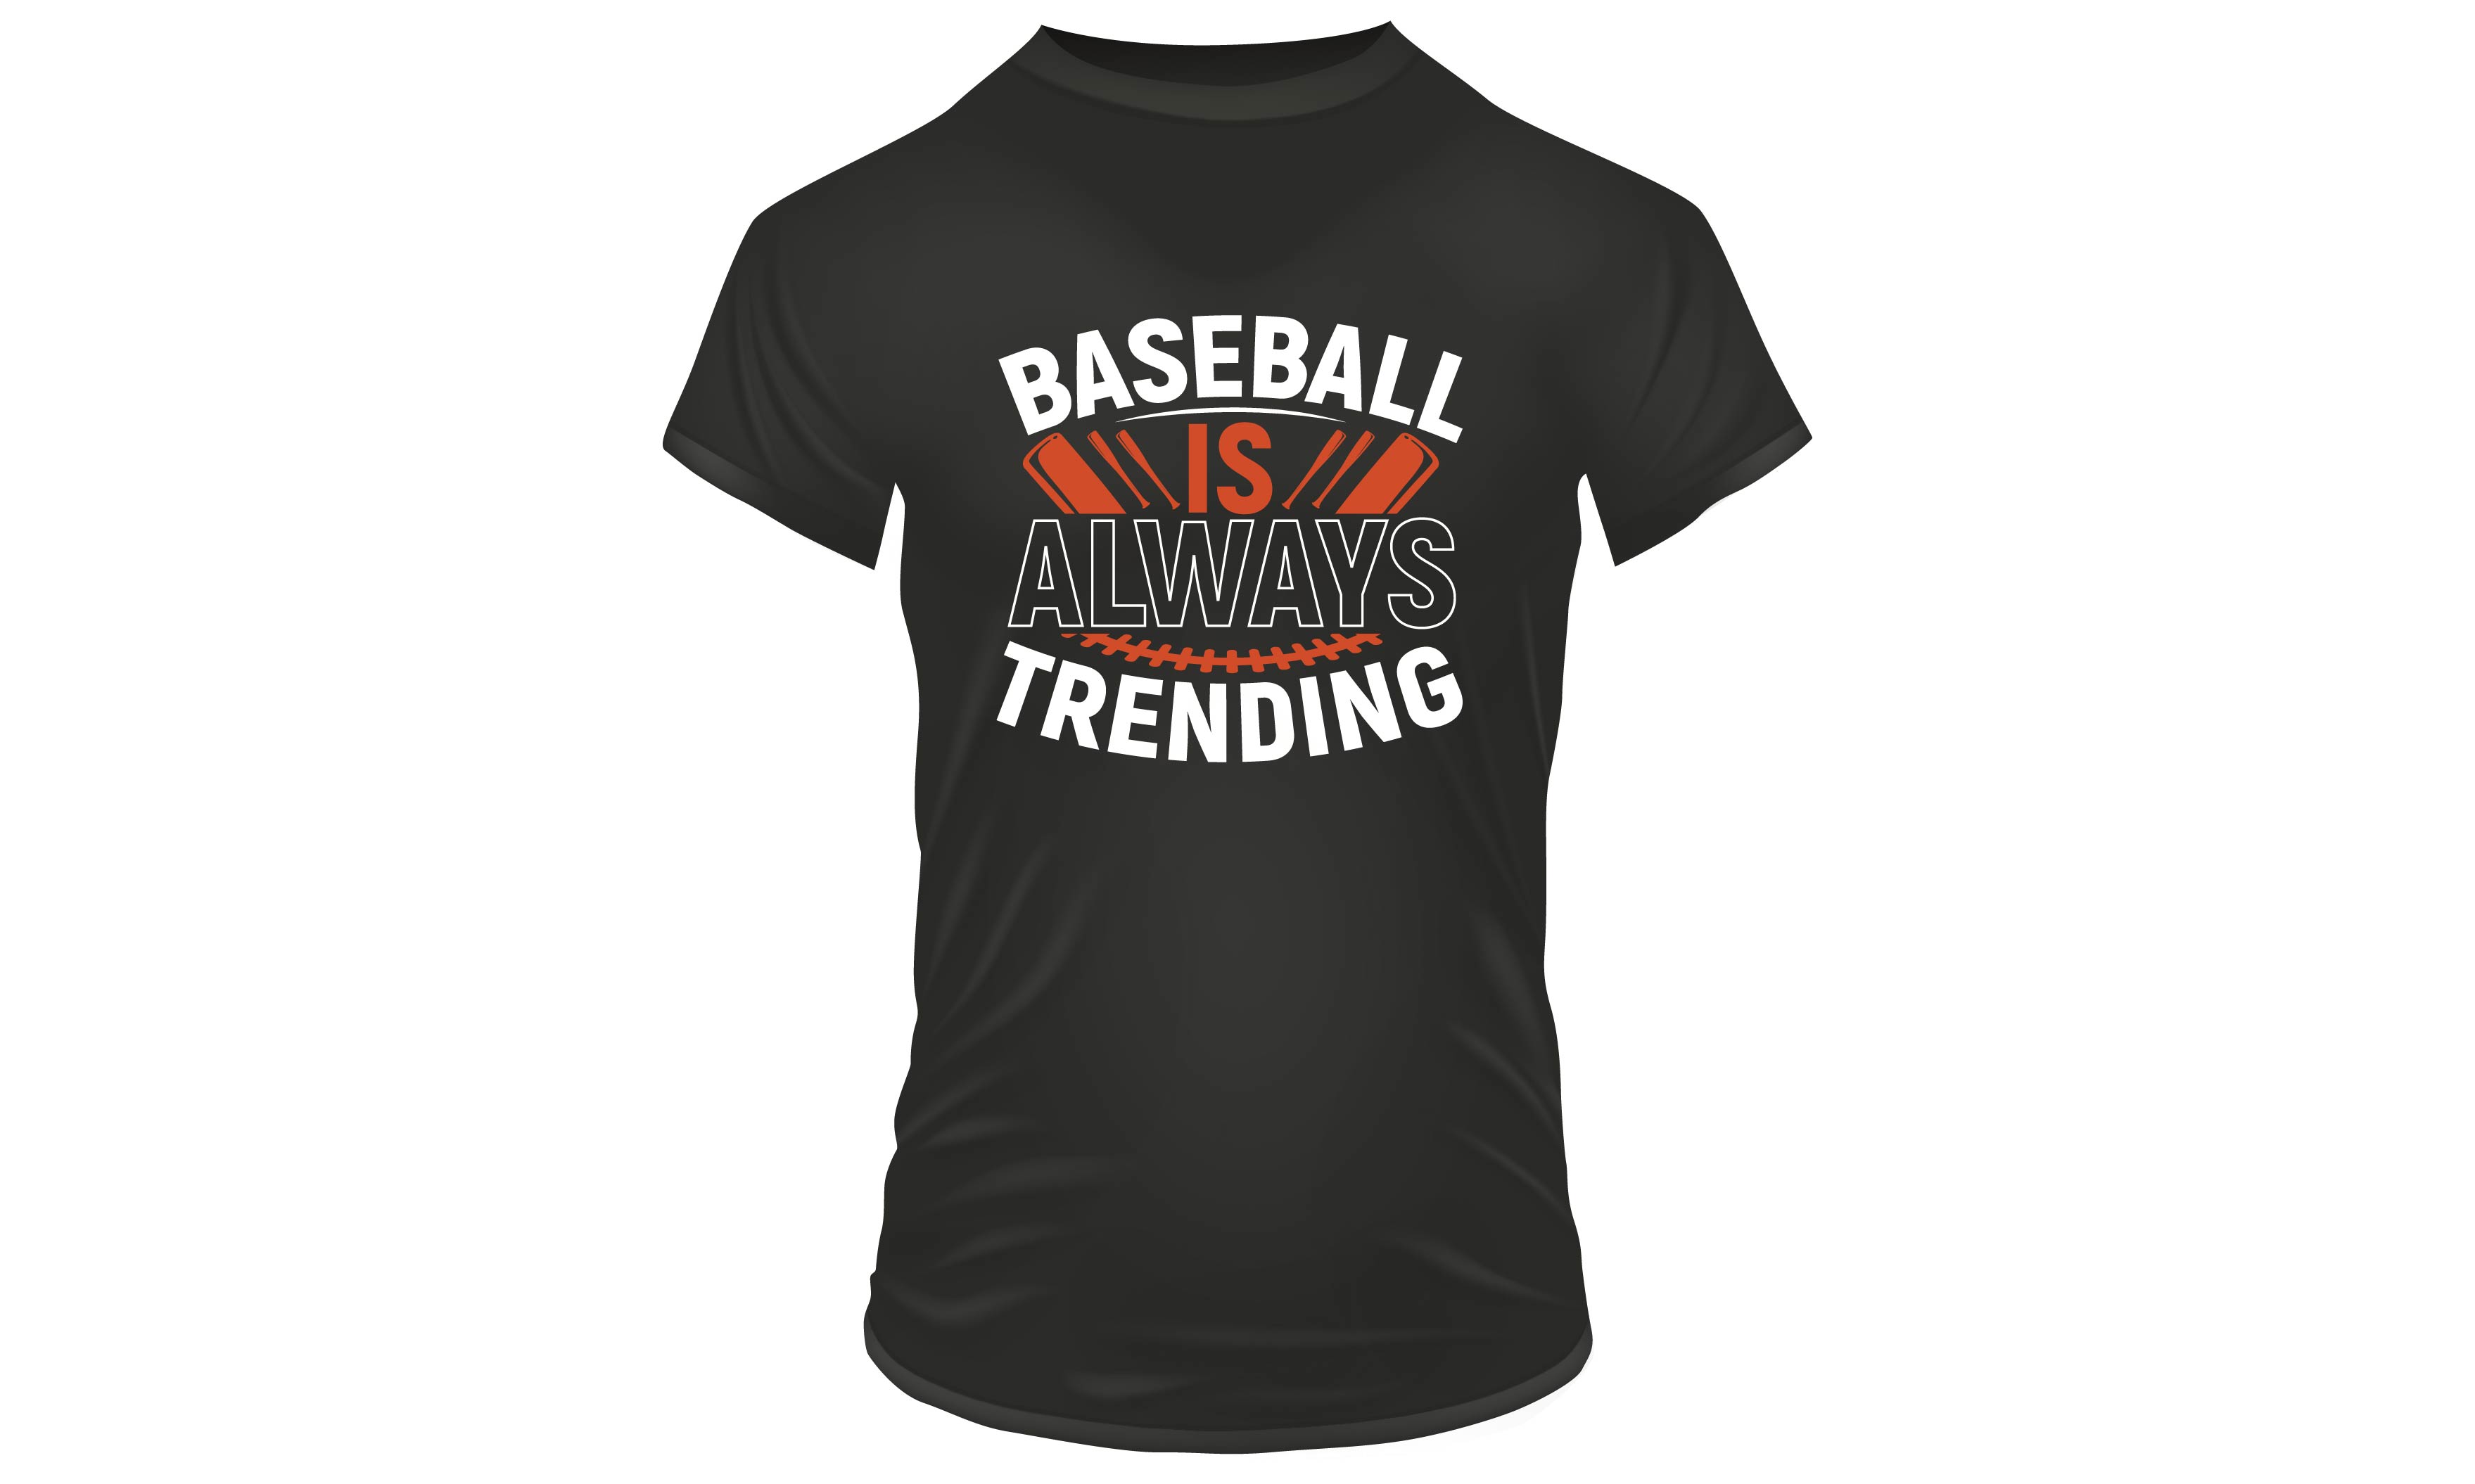 T - shirt that says baseball is always trending.